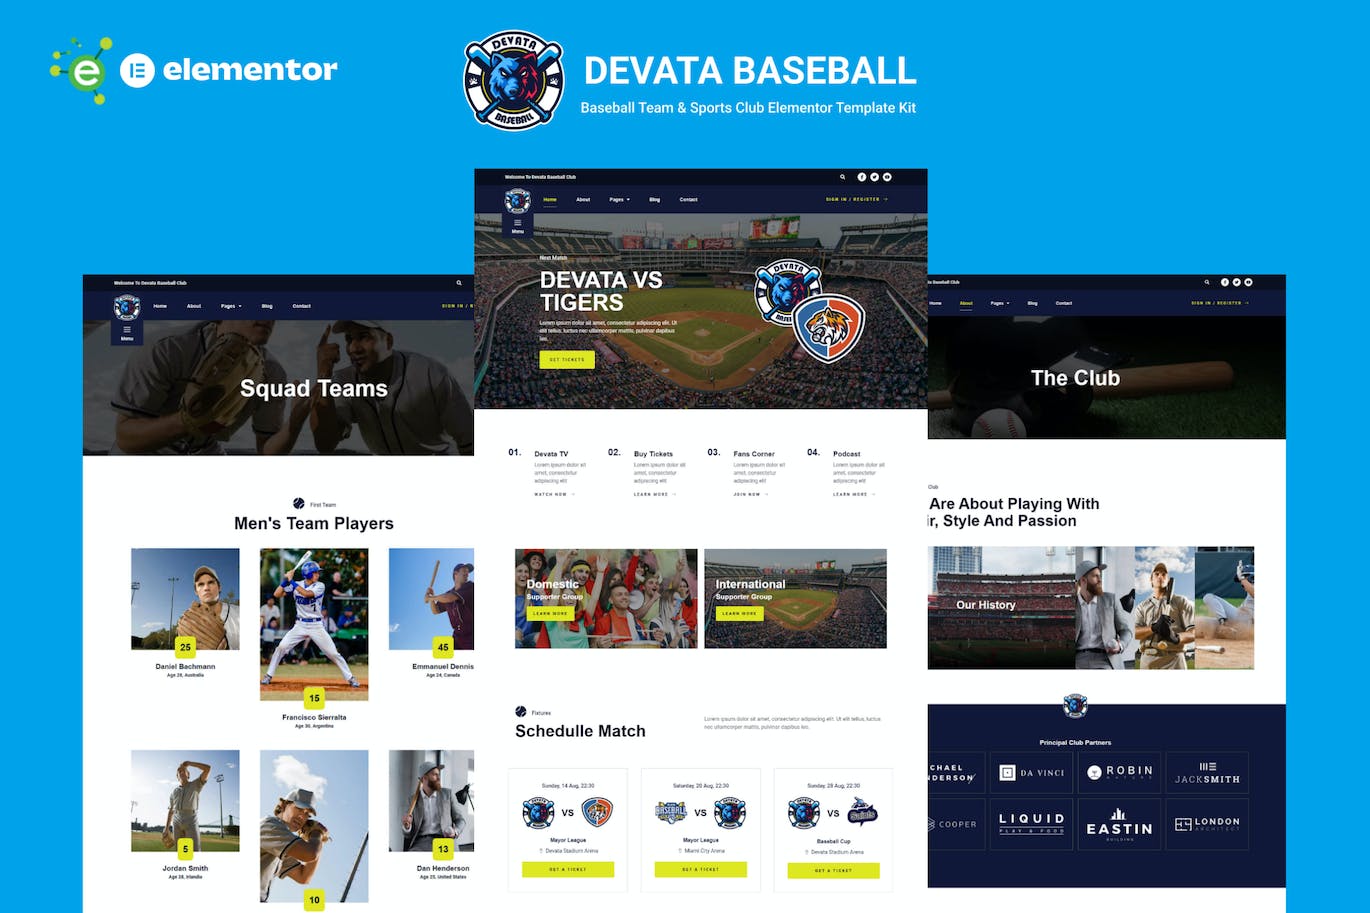 Devata - Baseball Team & Sports Club Elementor Template Kit